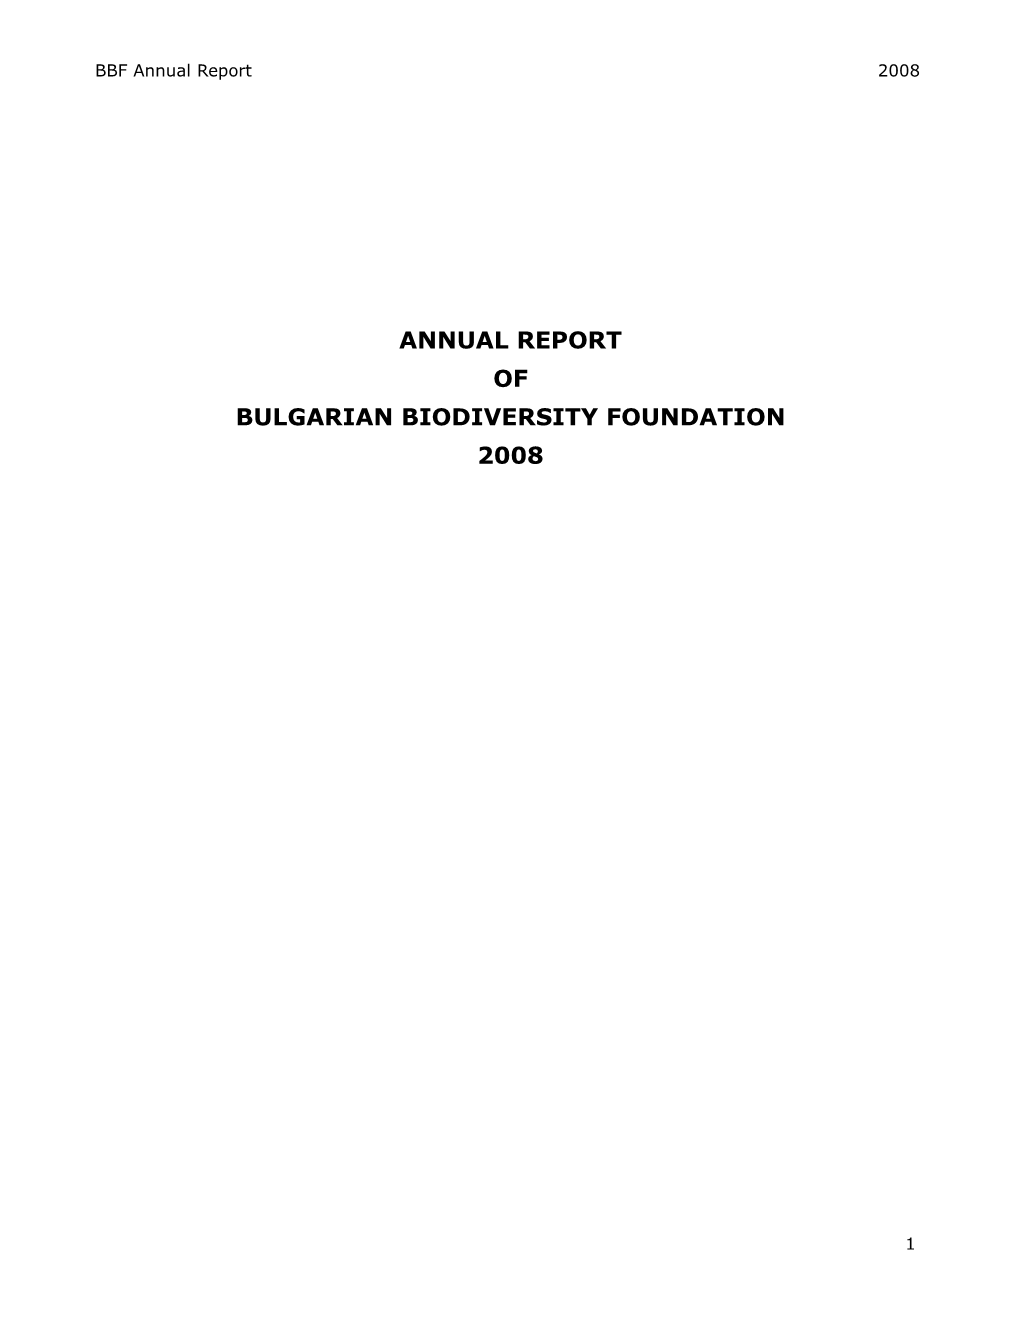 Annual Report of Bulgarian Biodiversity Foundation 2008